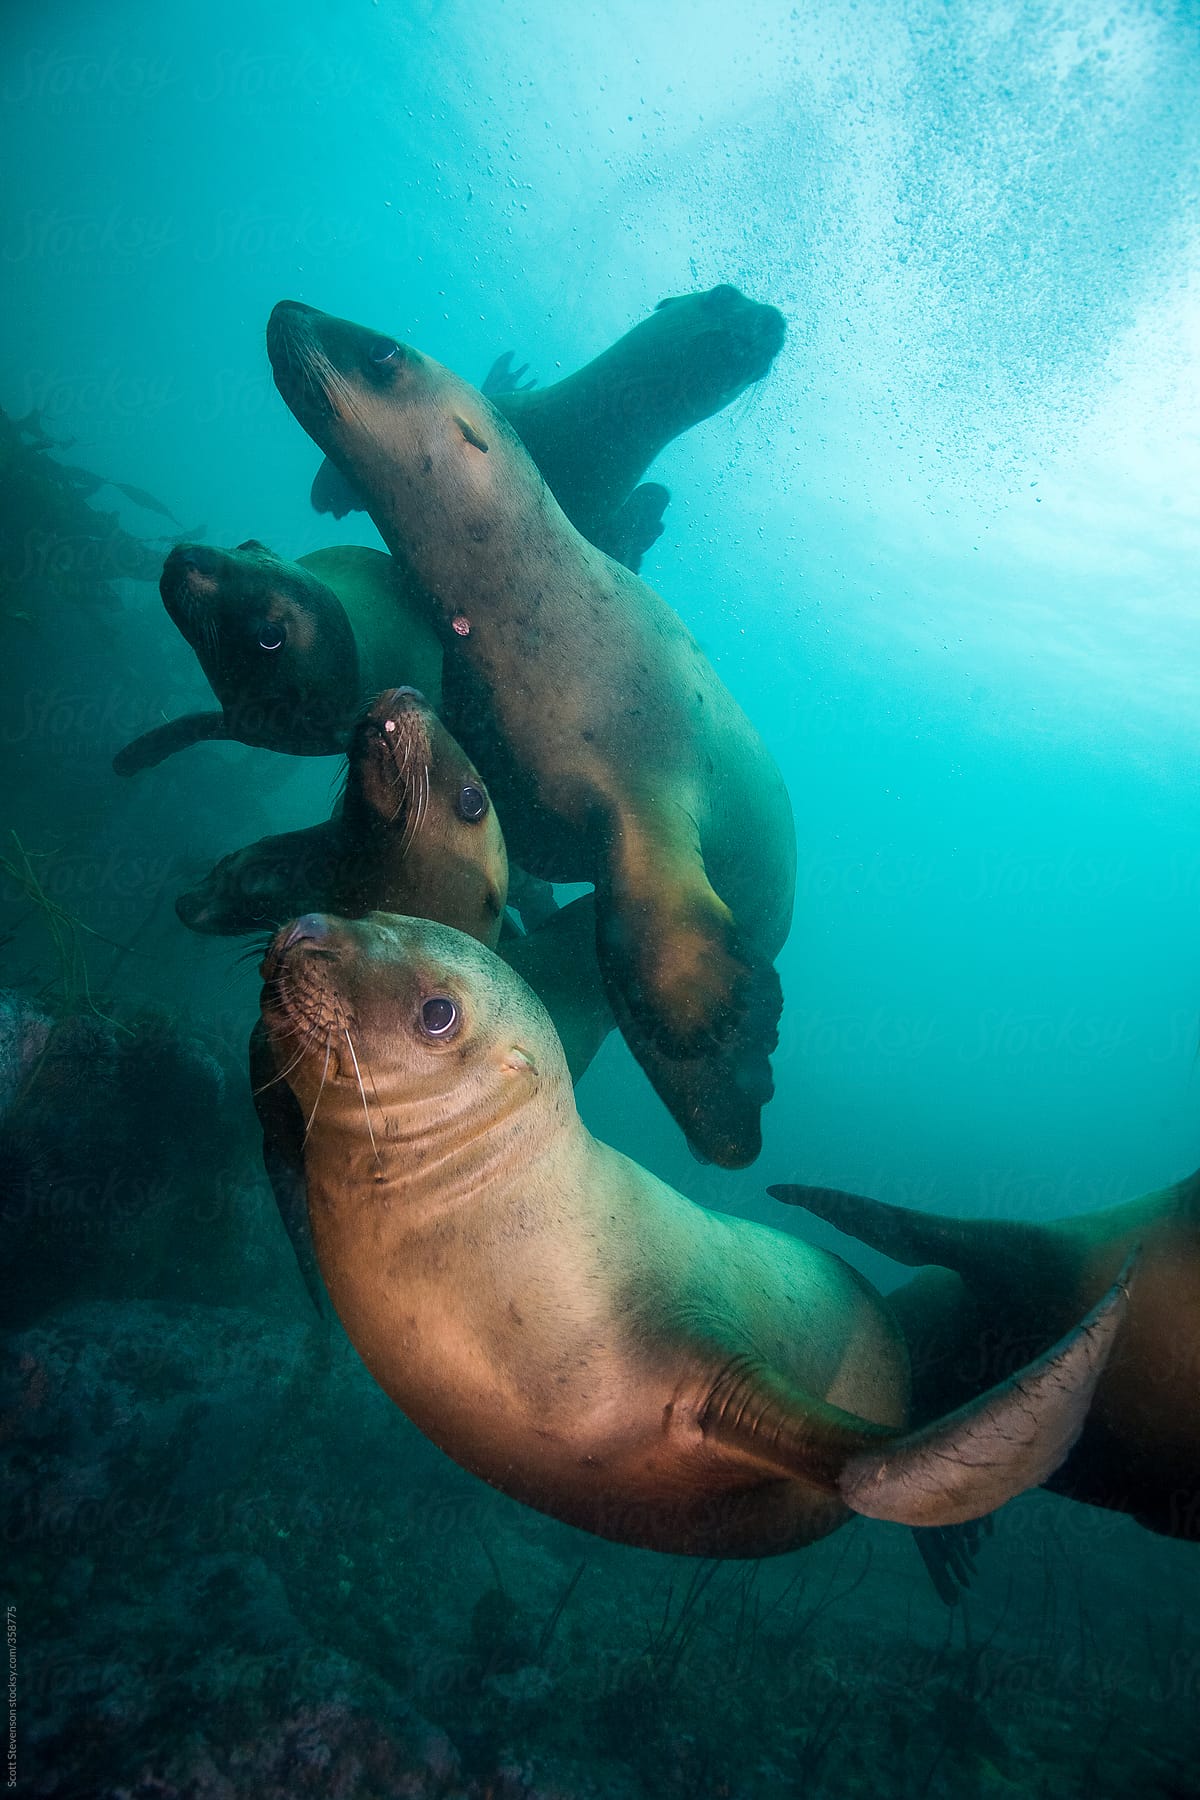 Swimming juvenile Steller Sea lions